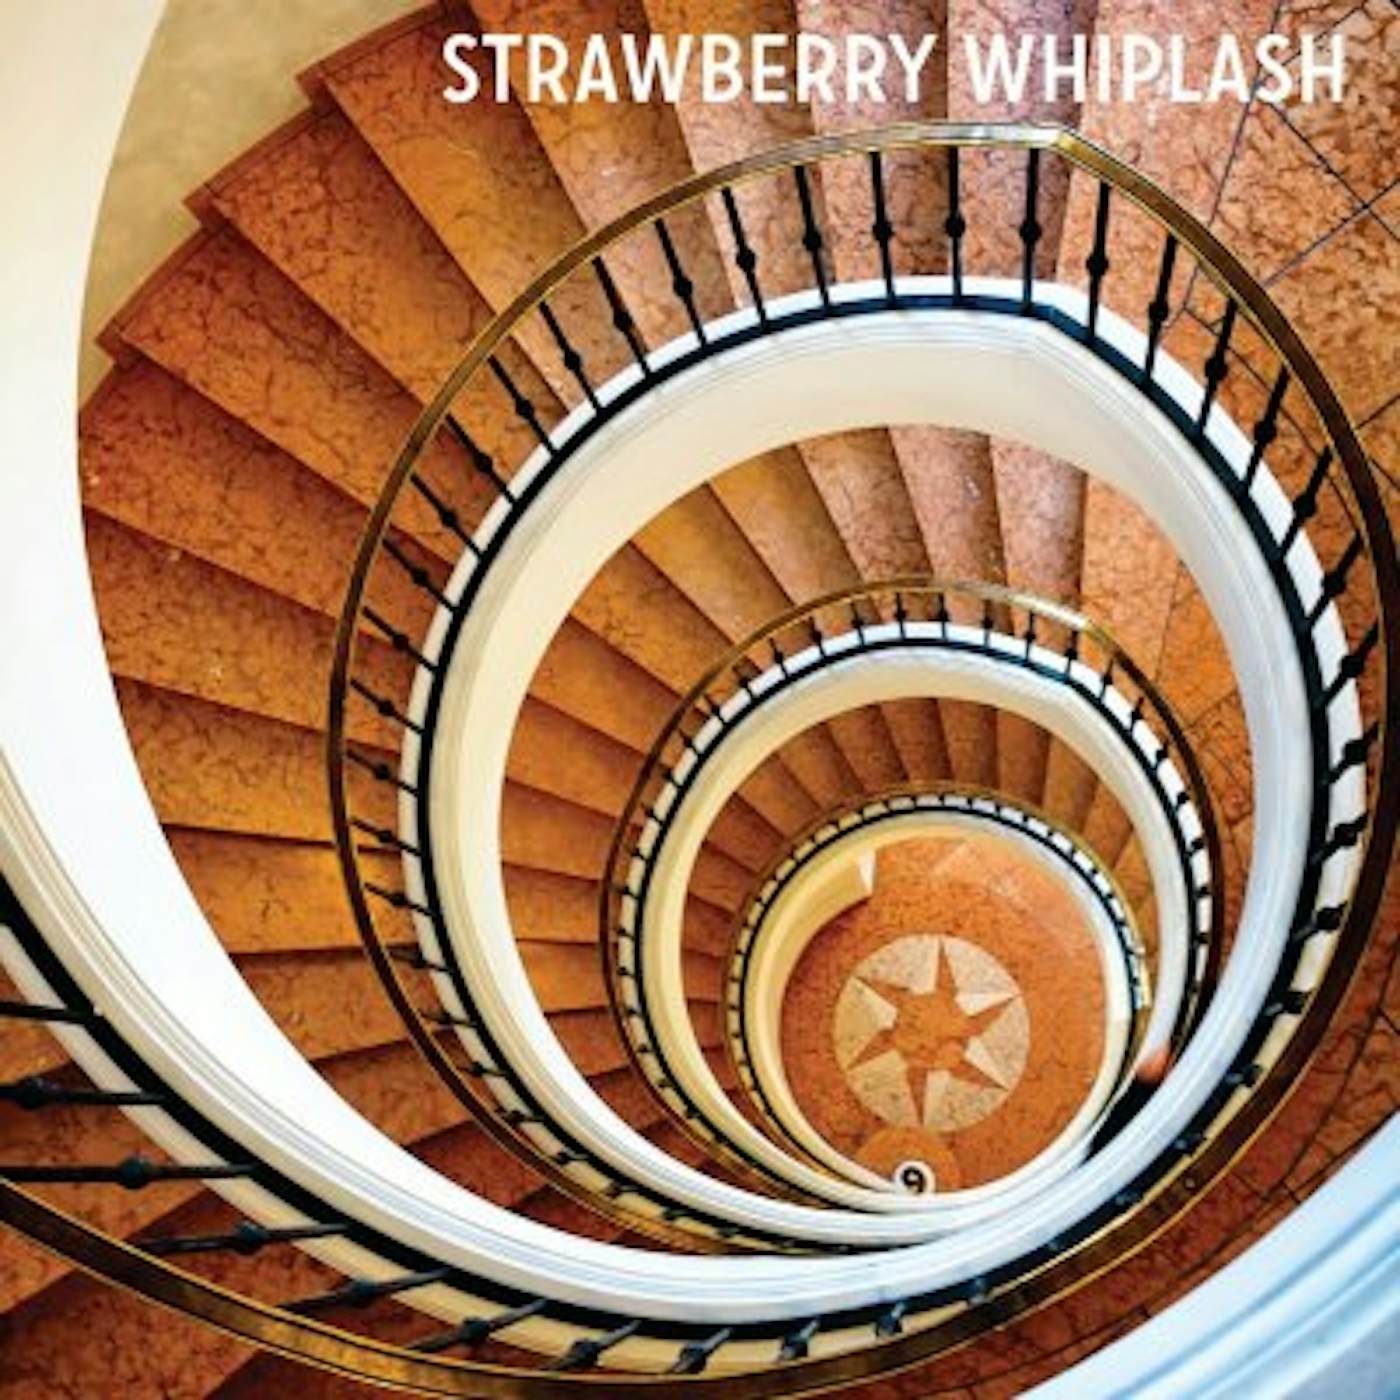 Strawberry Whiplash STUCK IN THE NEVER ENDING NOW CD